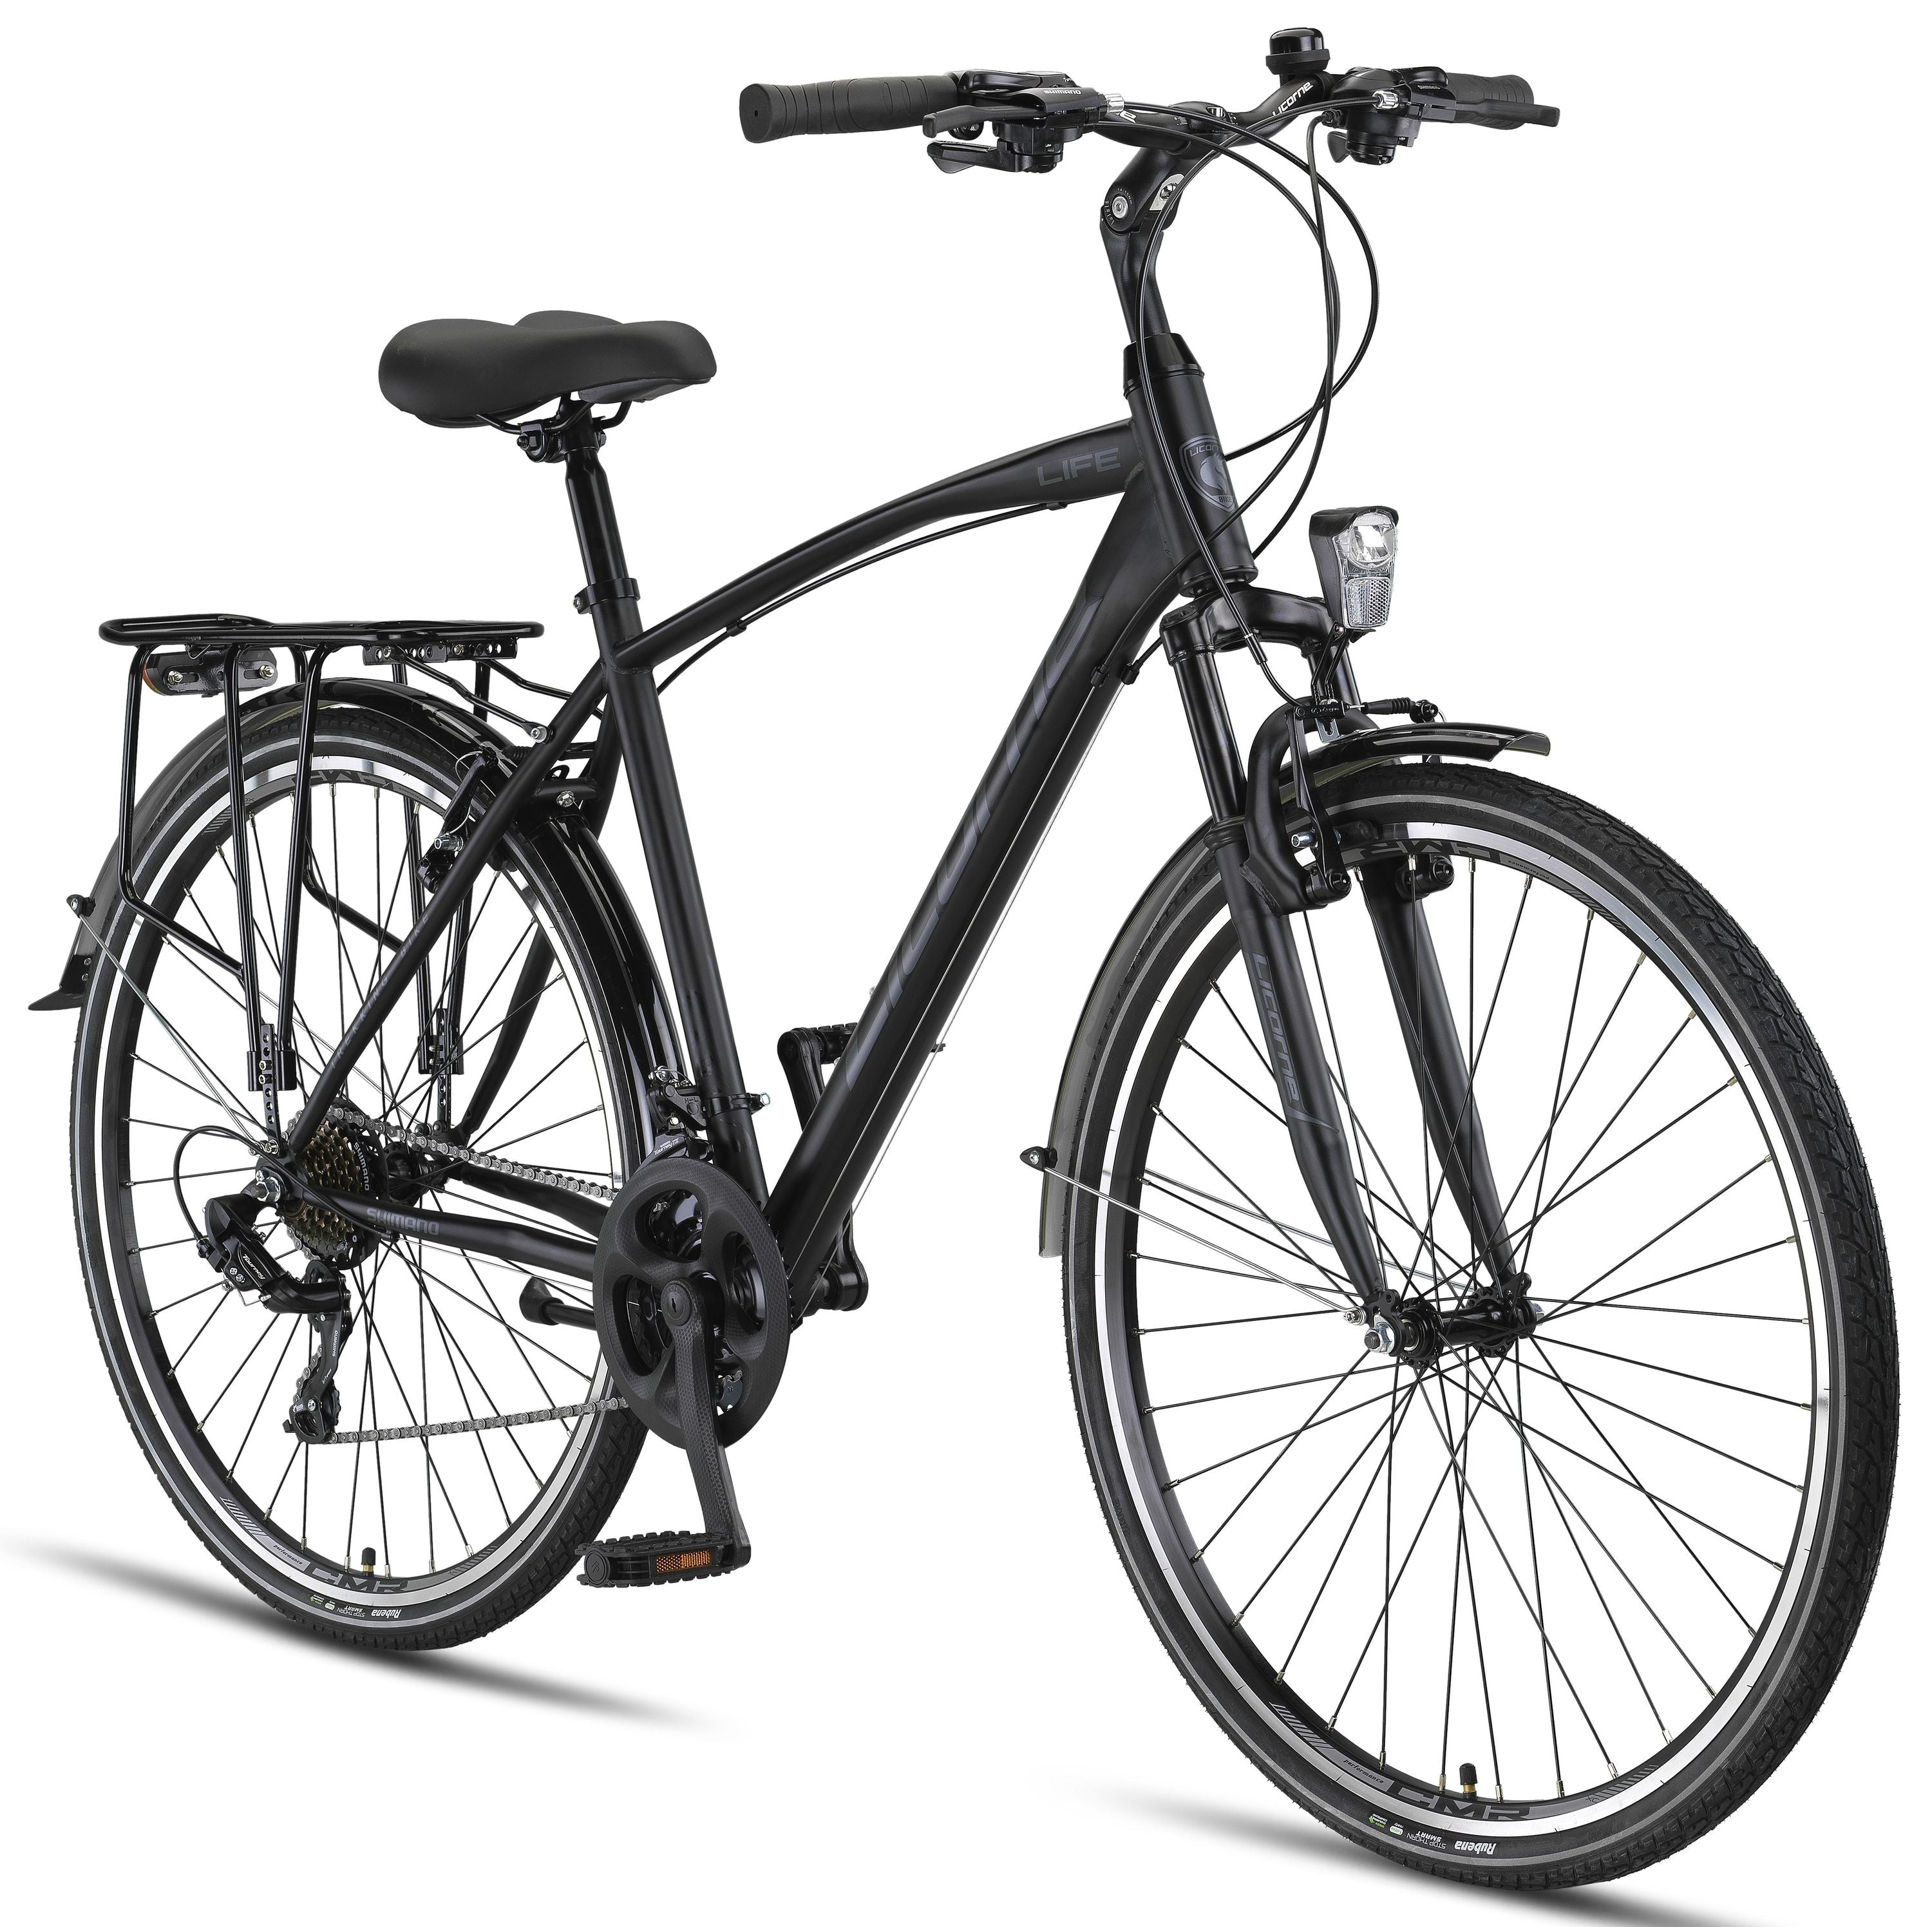 Licorne Bike Life M-V-ATB Premium Trekking Bike in 28 inch - Bicycle for men, boys, ladies and men - Shimano 21 speed shifting - Men's City Bike - Men's Bike